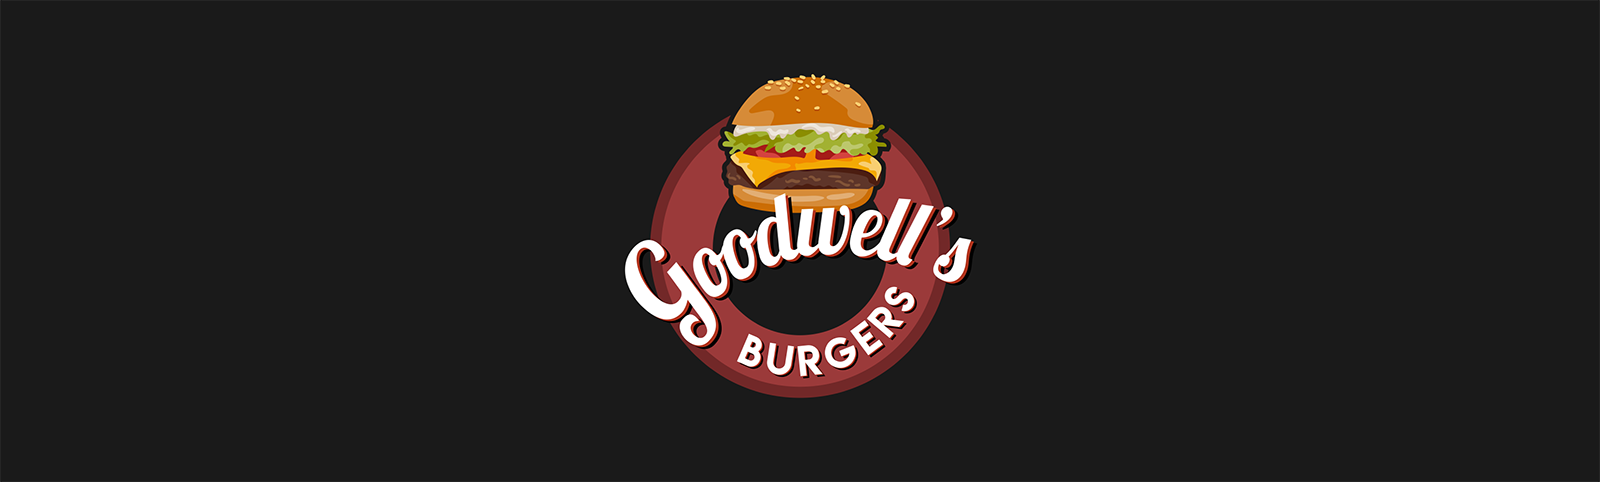 Goodwell's Burgers Logo Design